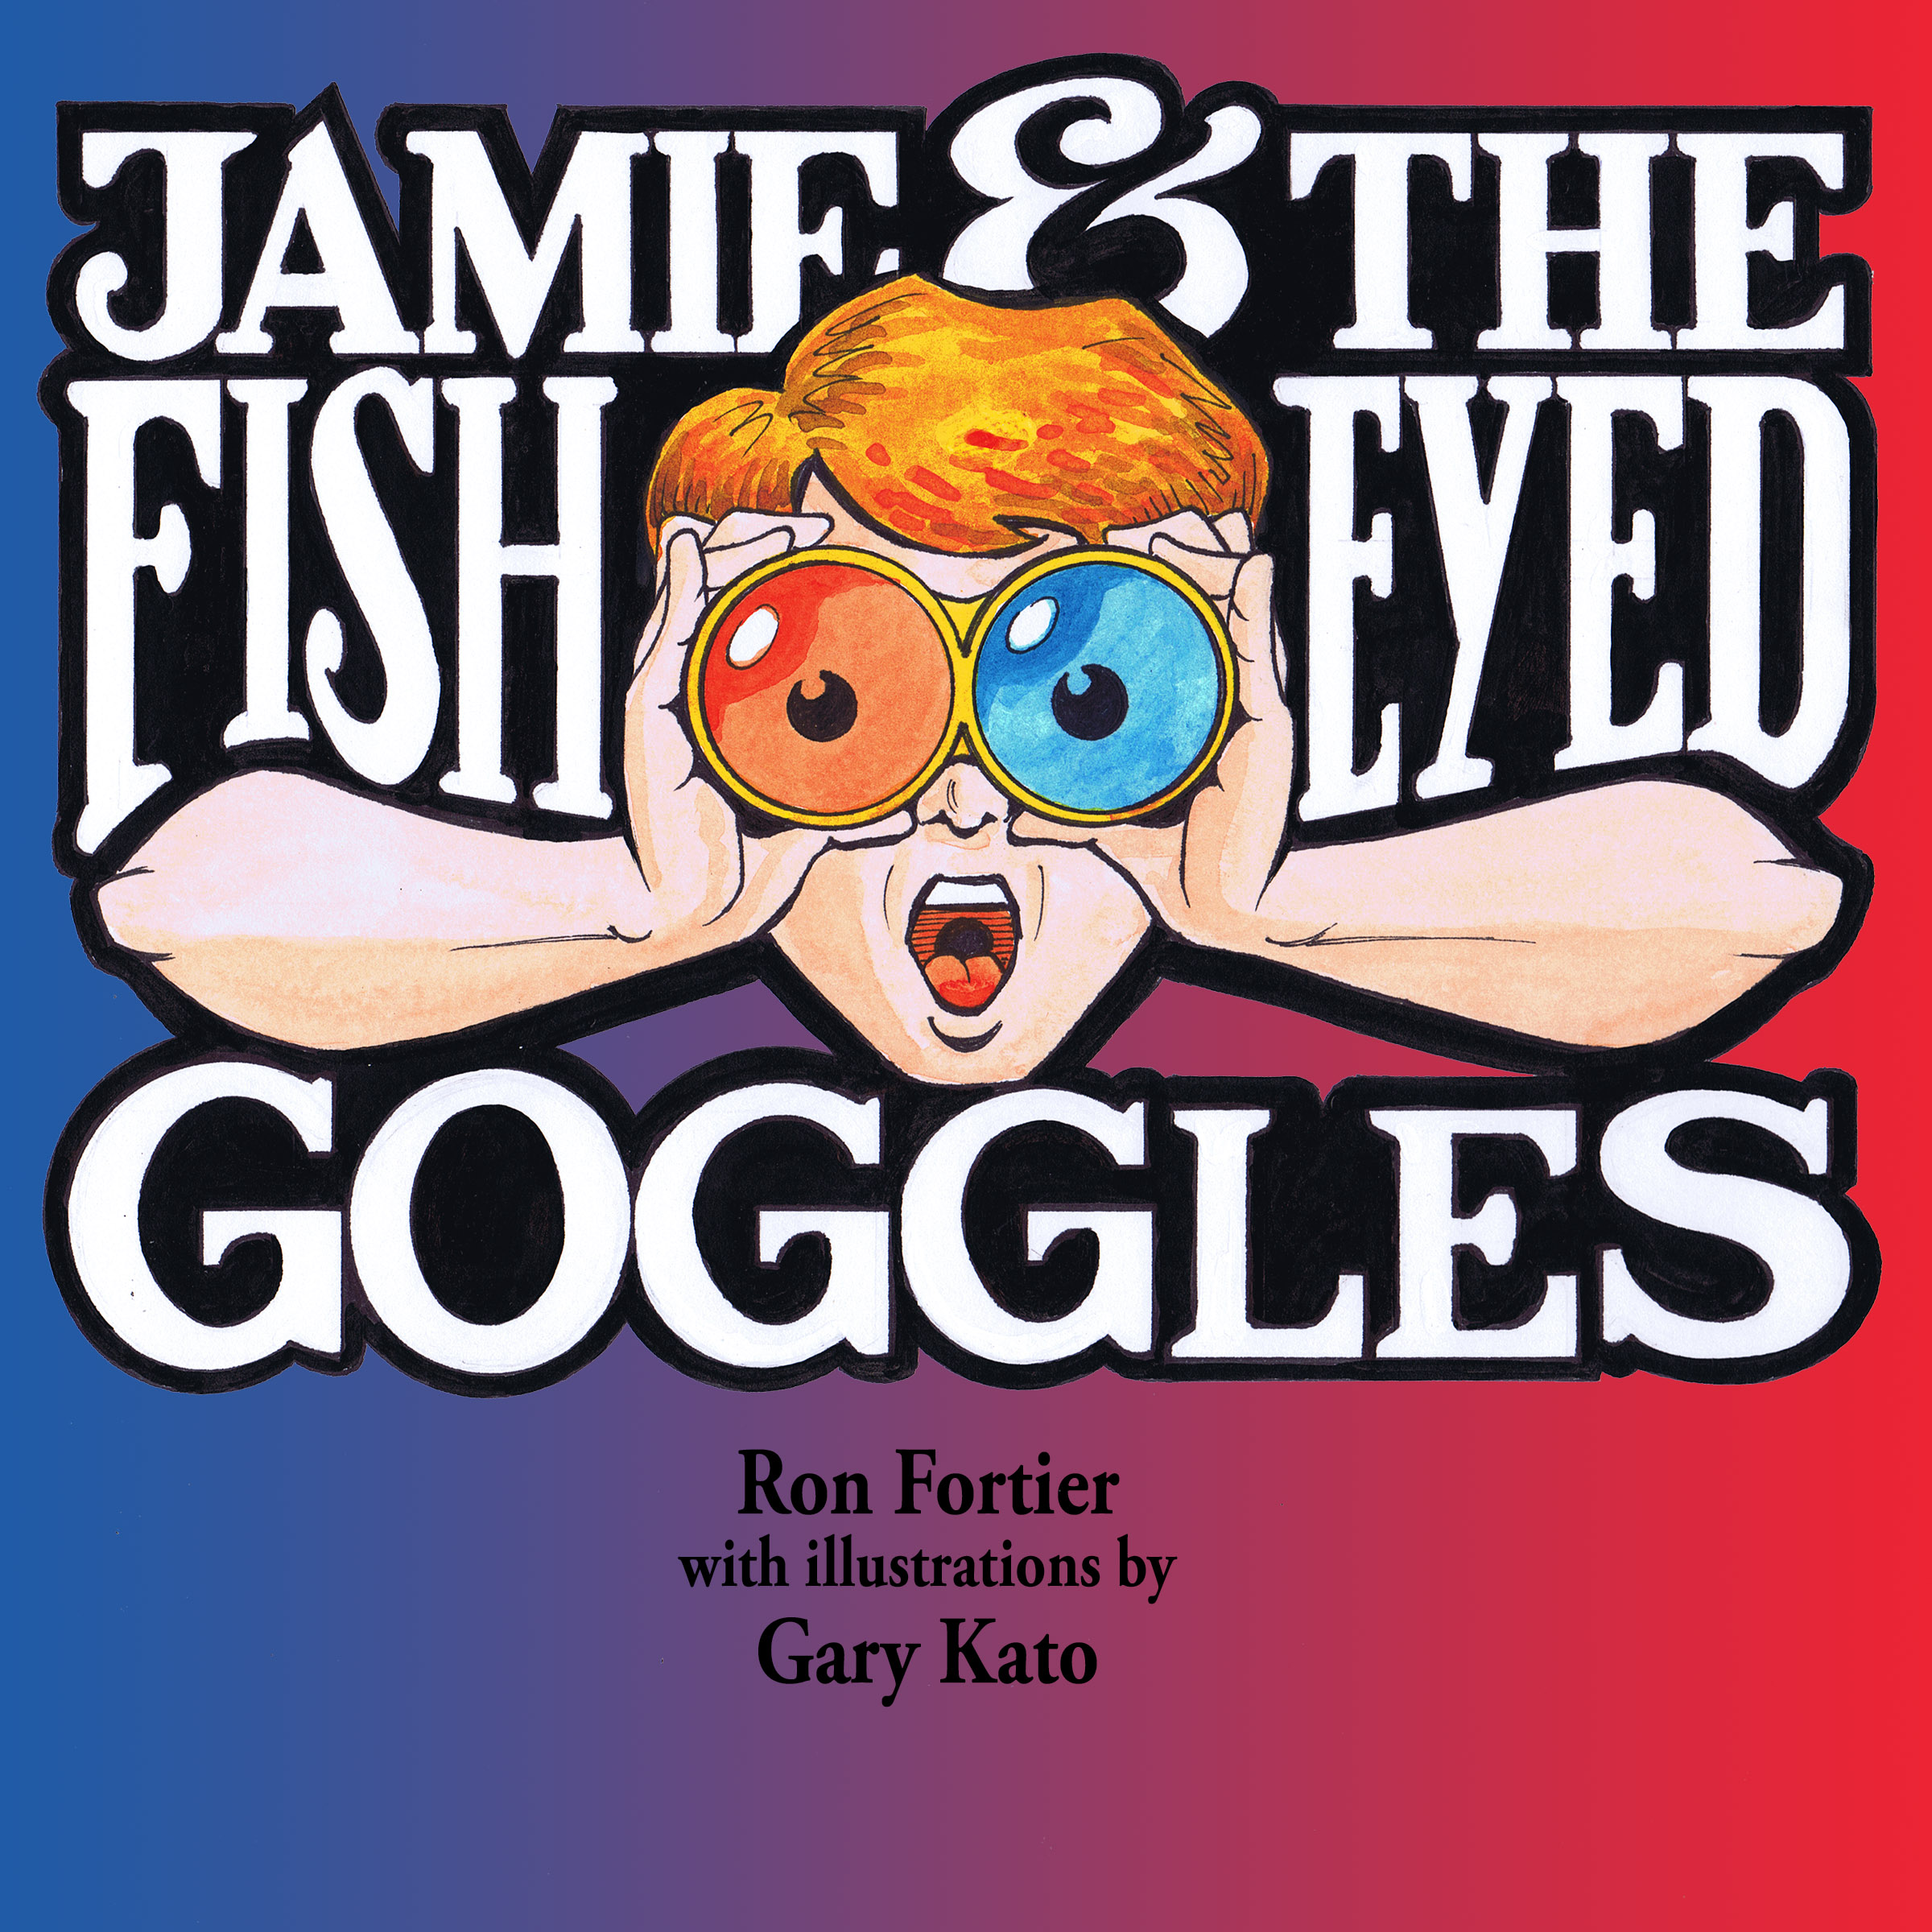 Fisheyed goggles